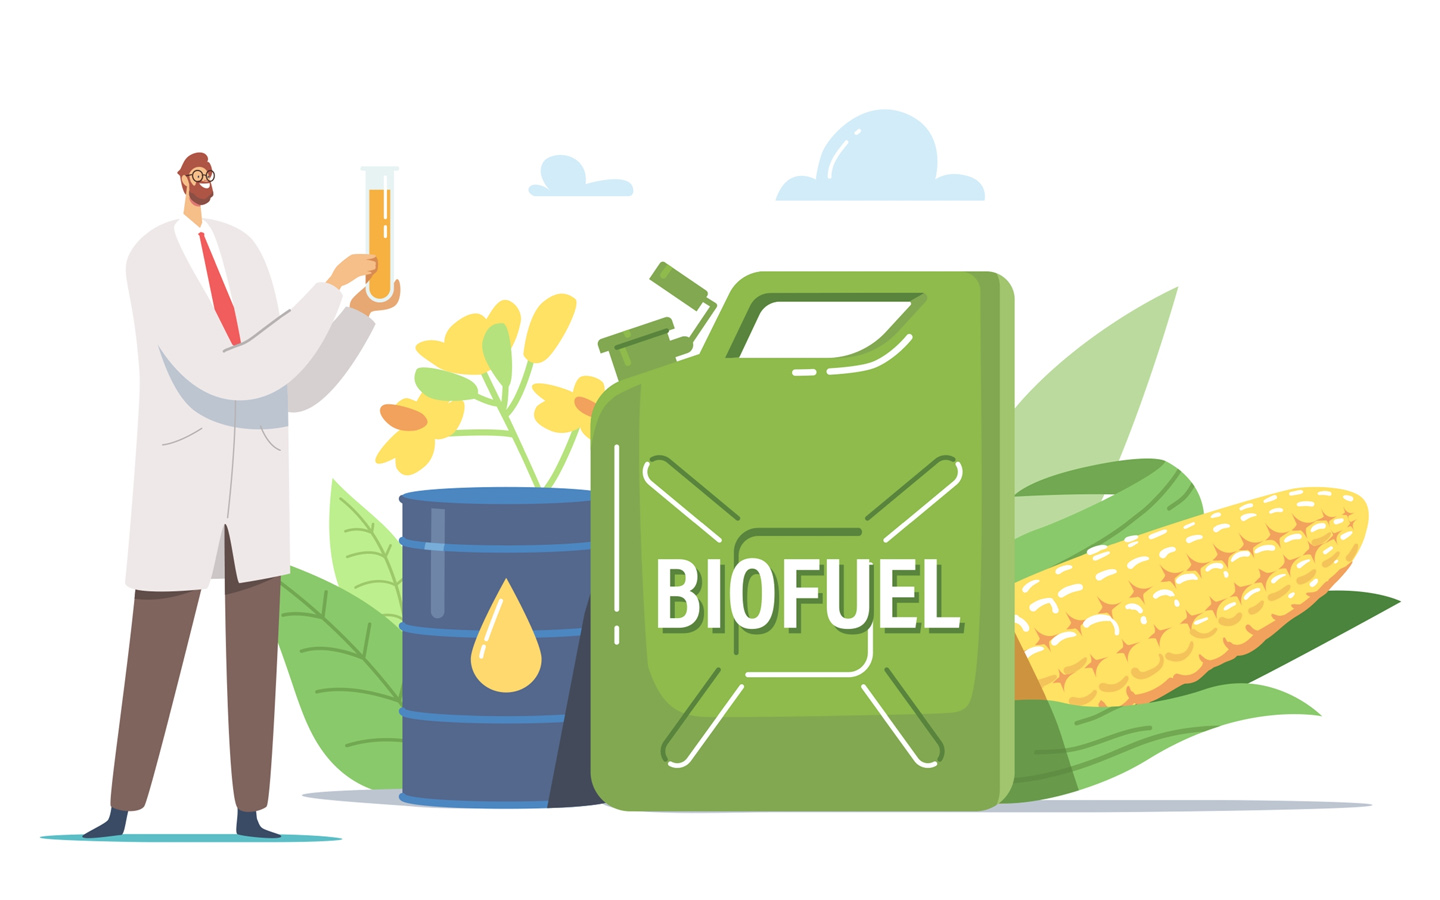 biofuels vs fossil fuels: biofuel production elements